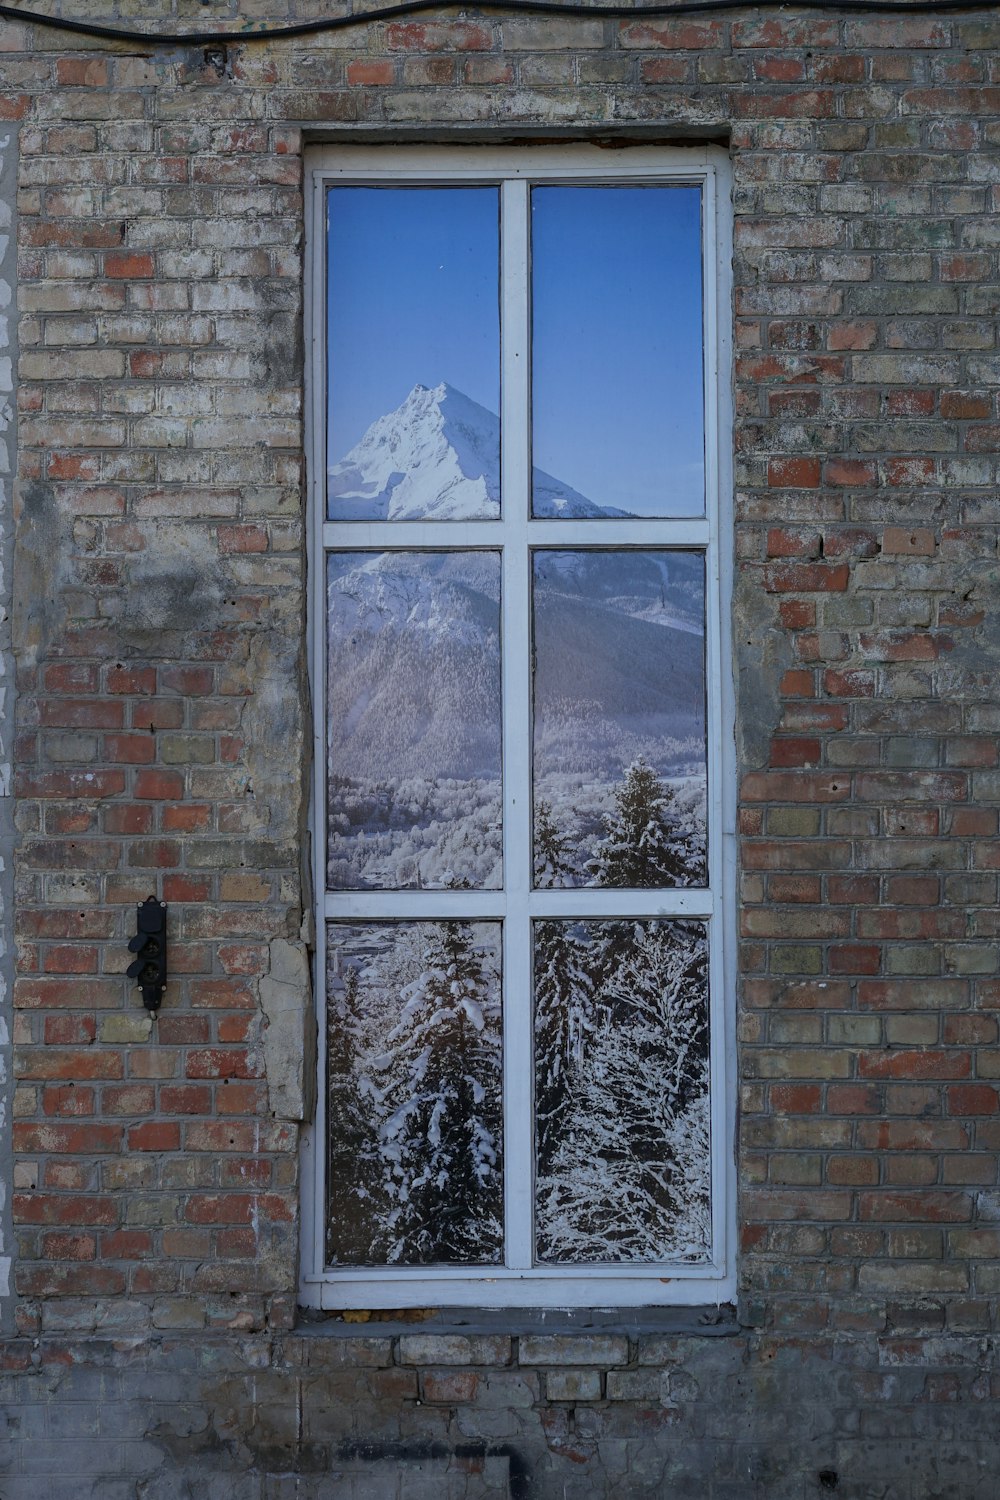 windowpane reflecting mountain and trees